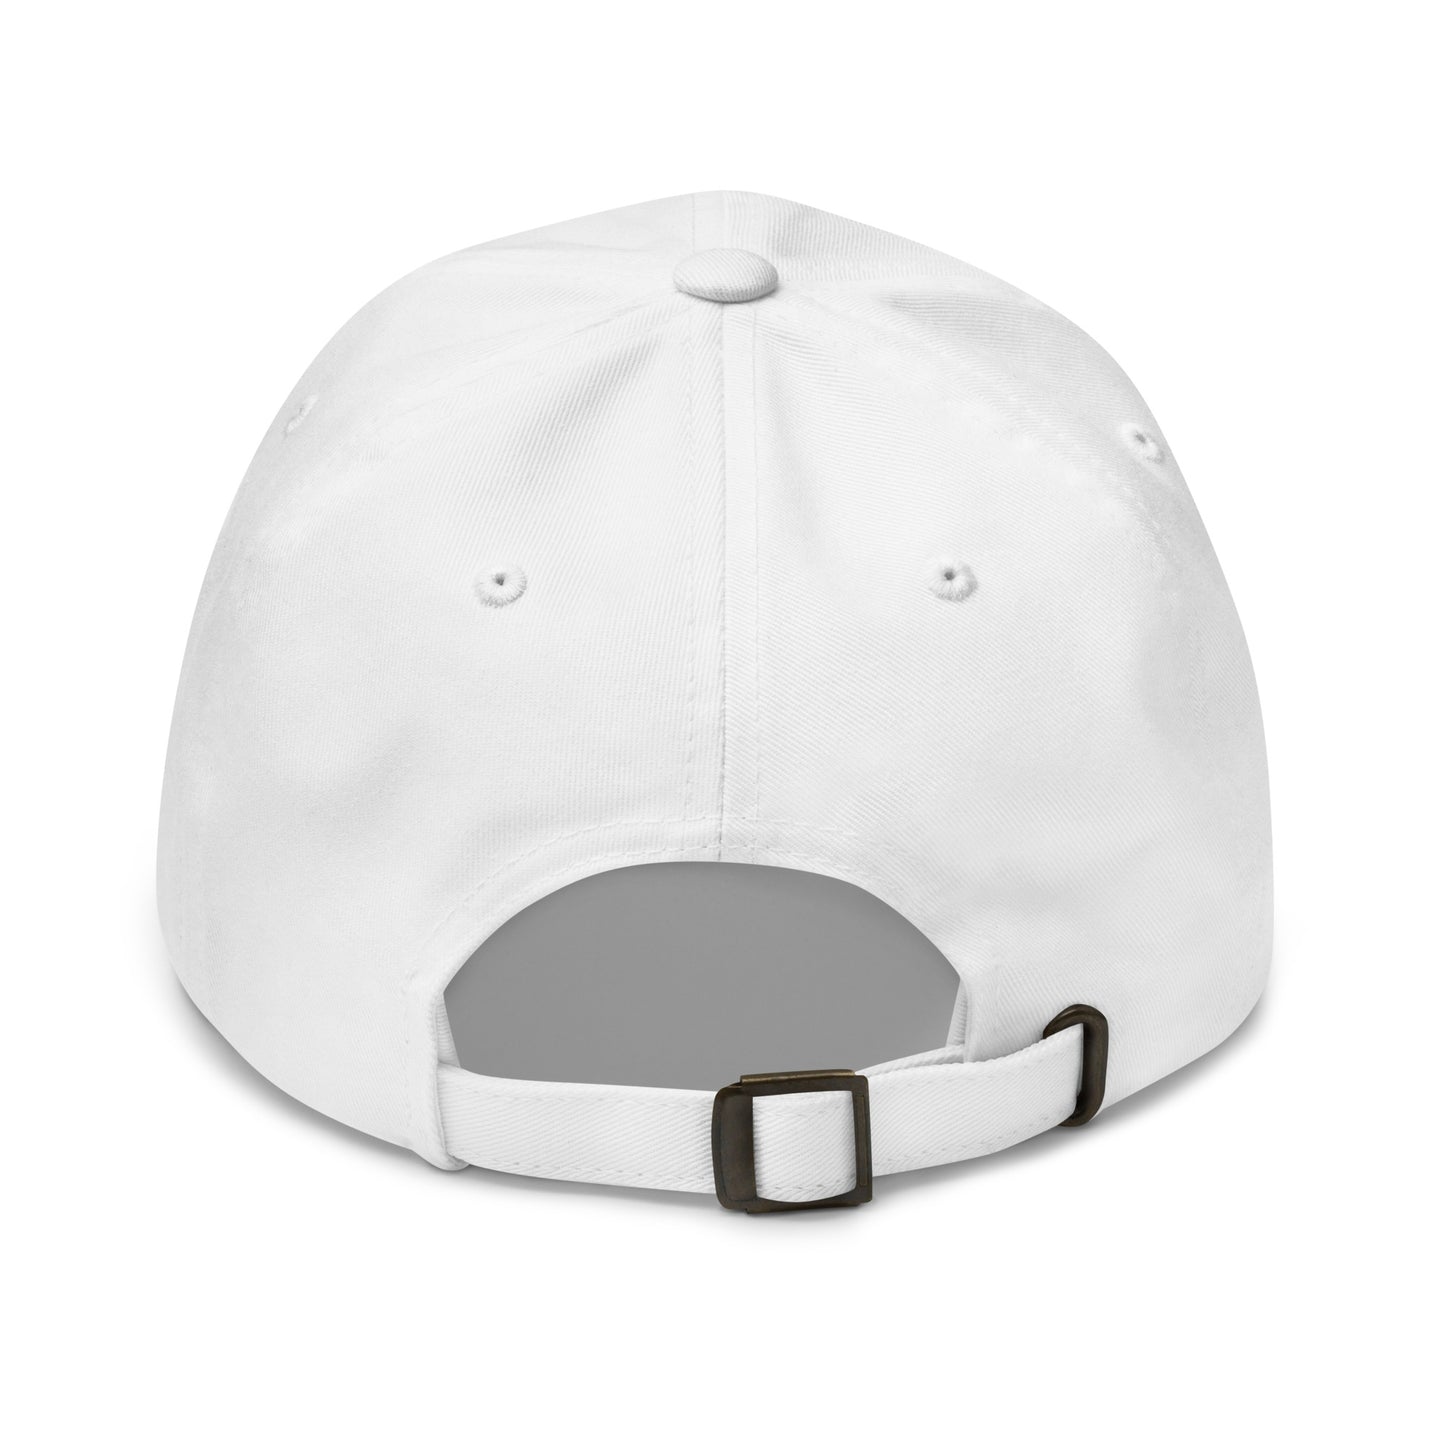 Monorail Golf Club Hat - White/Navy